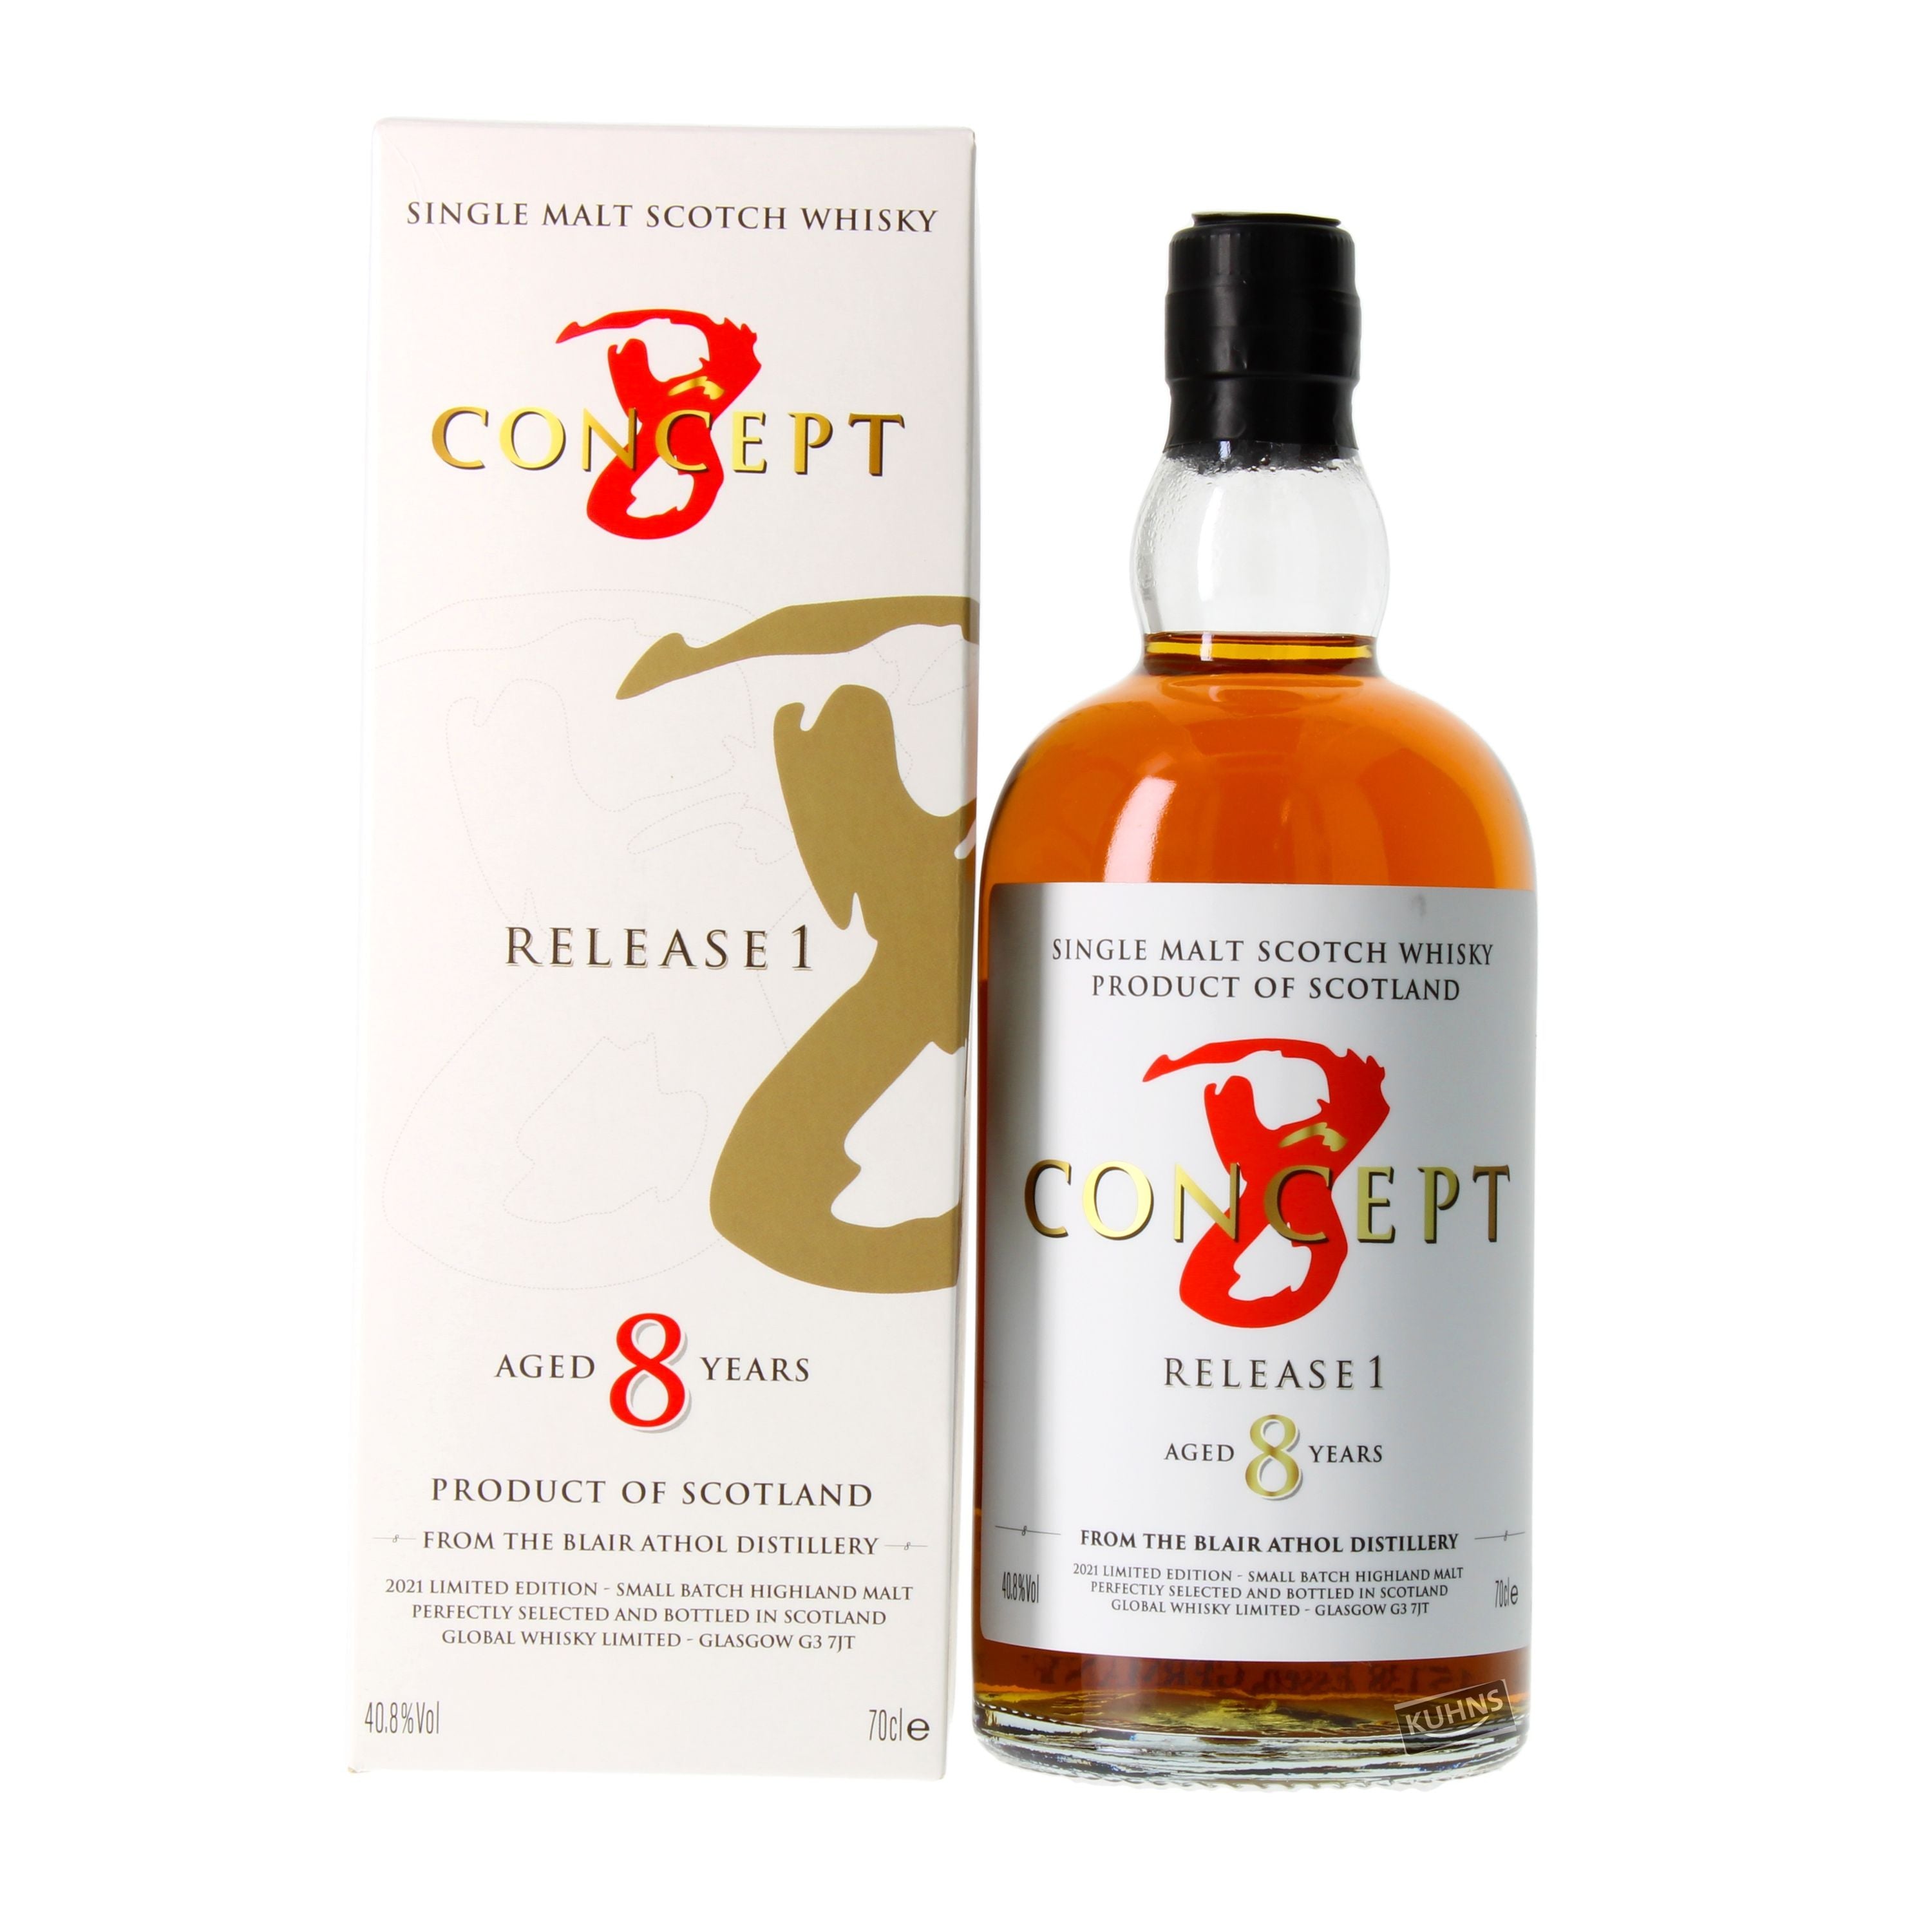 Concept 8 Blair Athol 8 Years Release #1 Single Malt Scotch Whiskey 0.7l, alc. 40.8% by volume